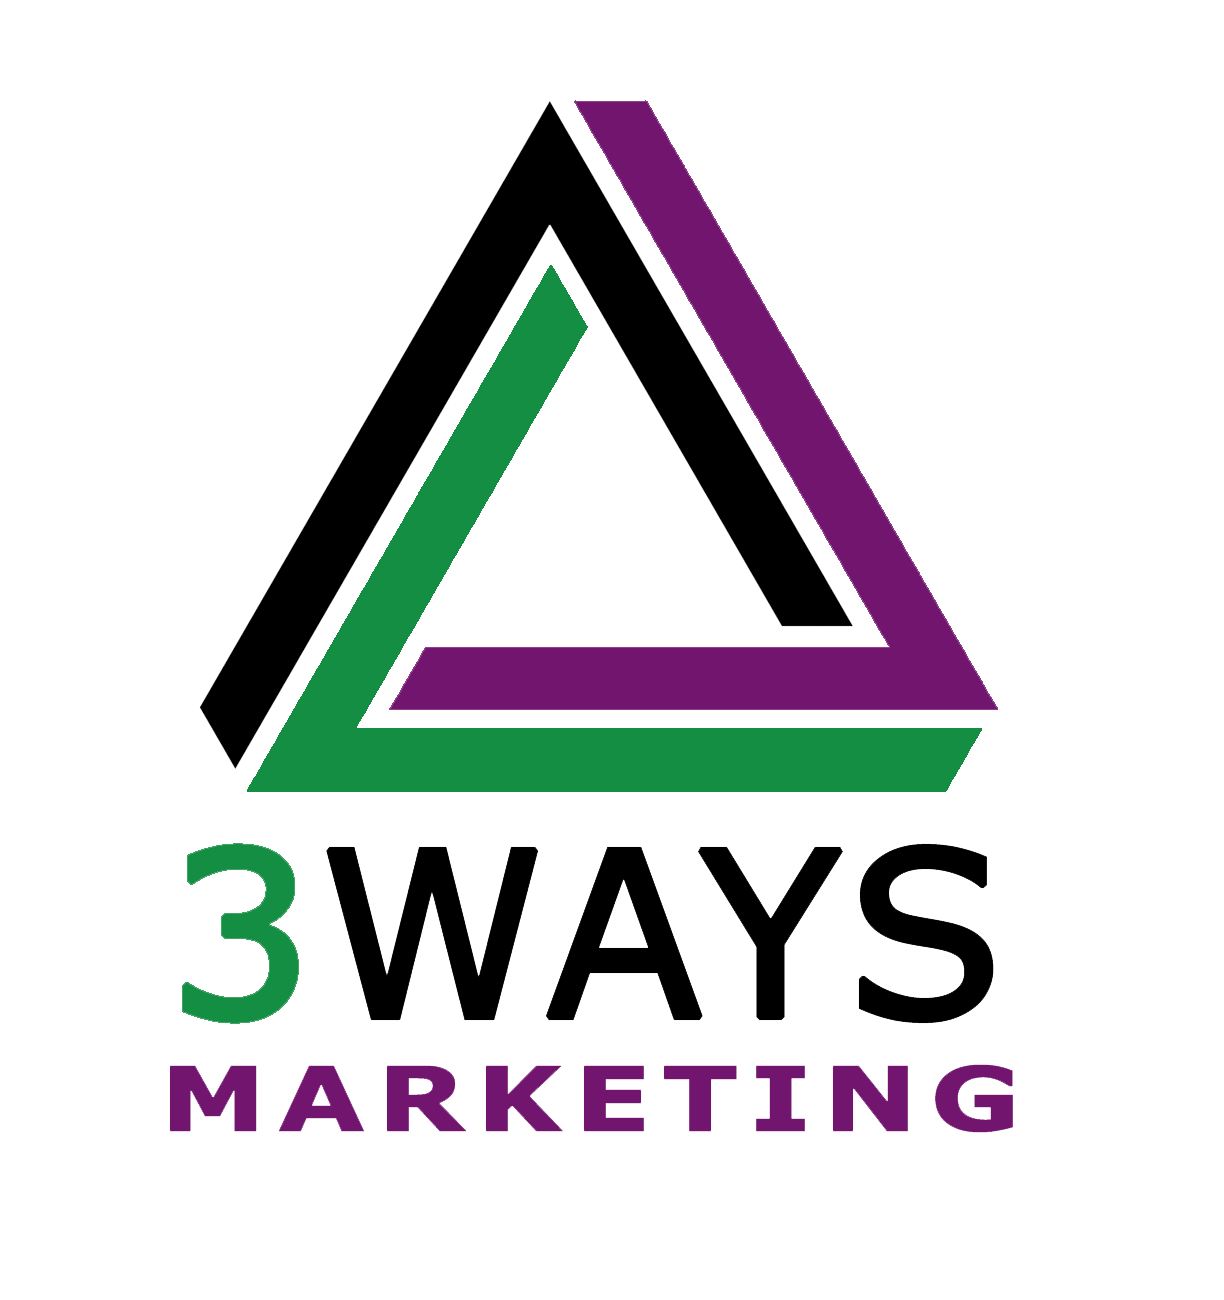 3 Ways Marketing Logo